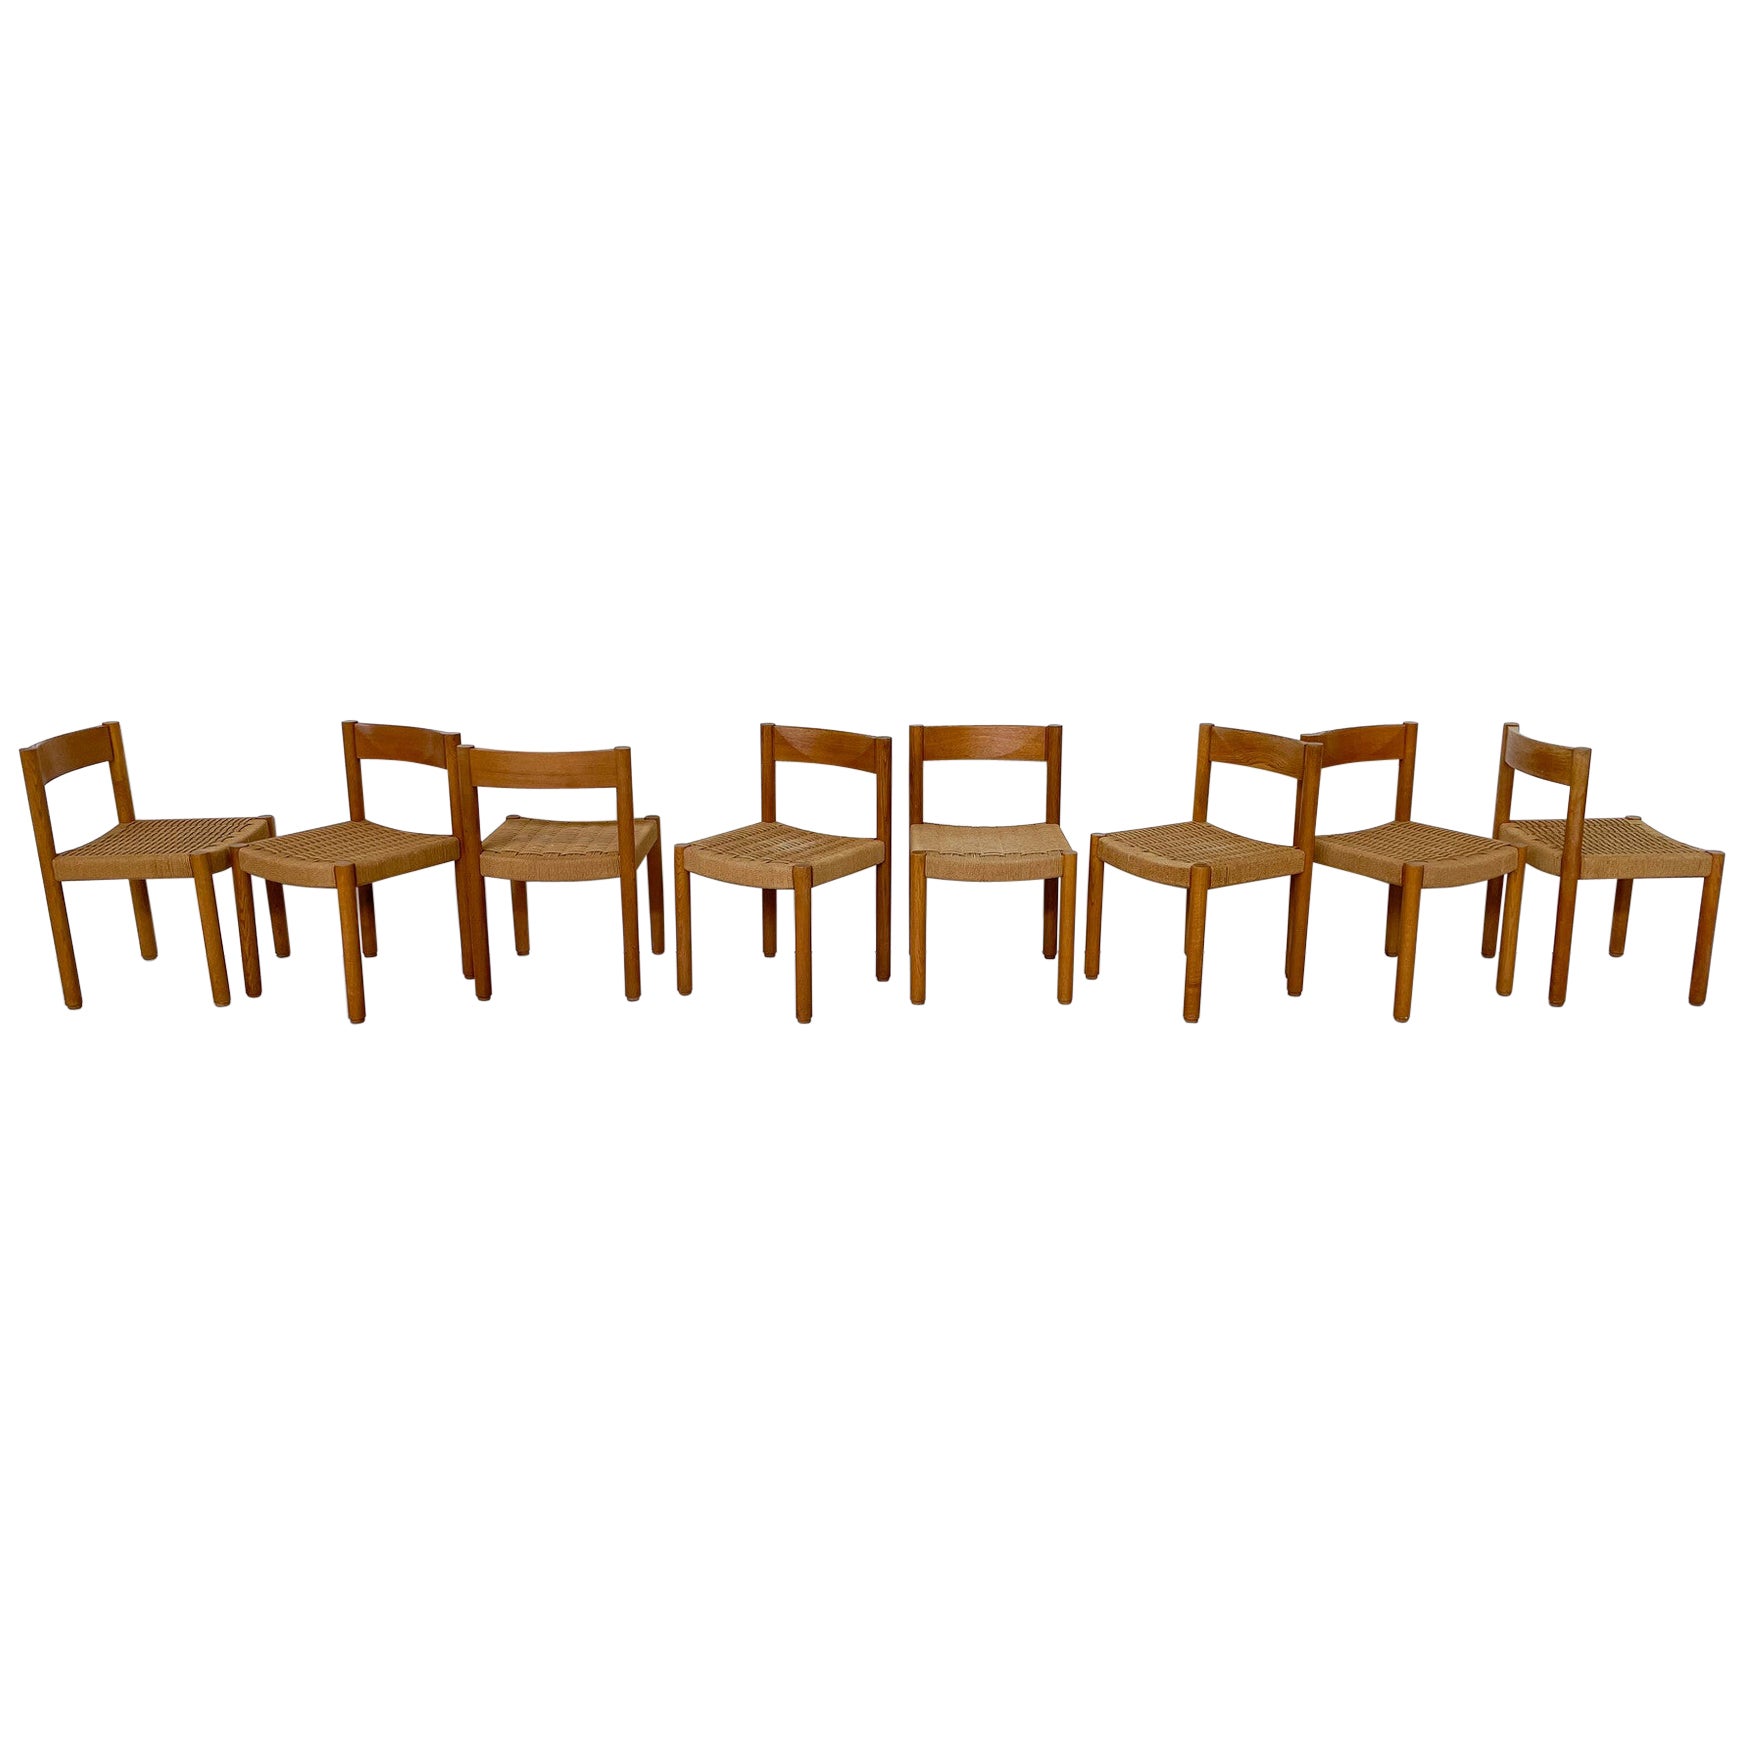 Mid-Century Modern Set of 8 Robert Haussmann Chairs, Switzerland, 1960s